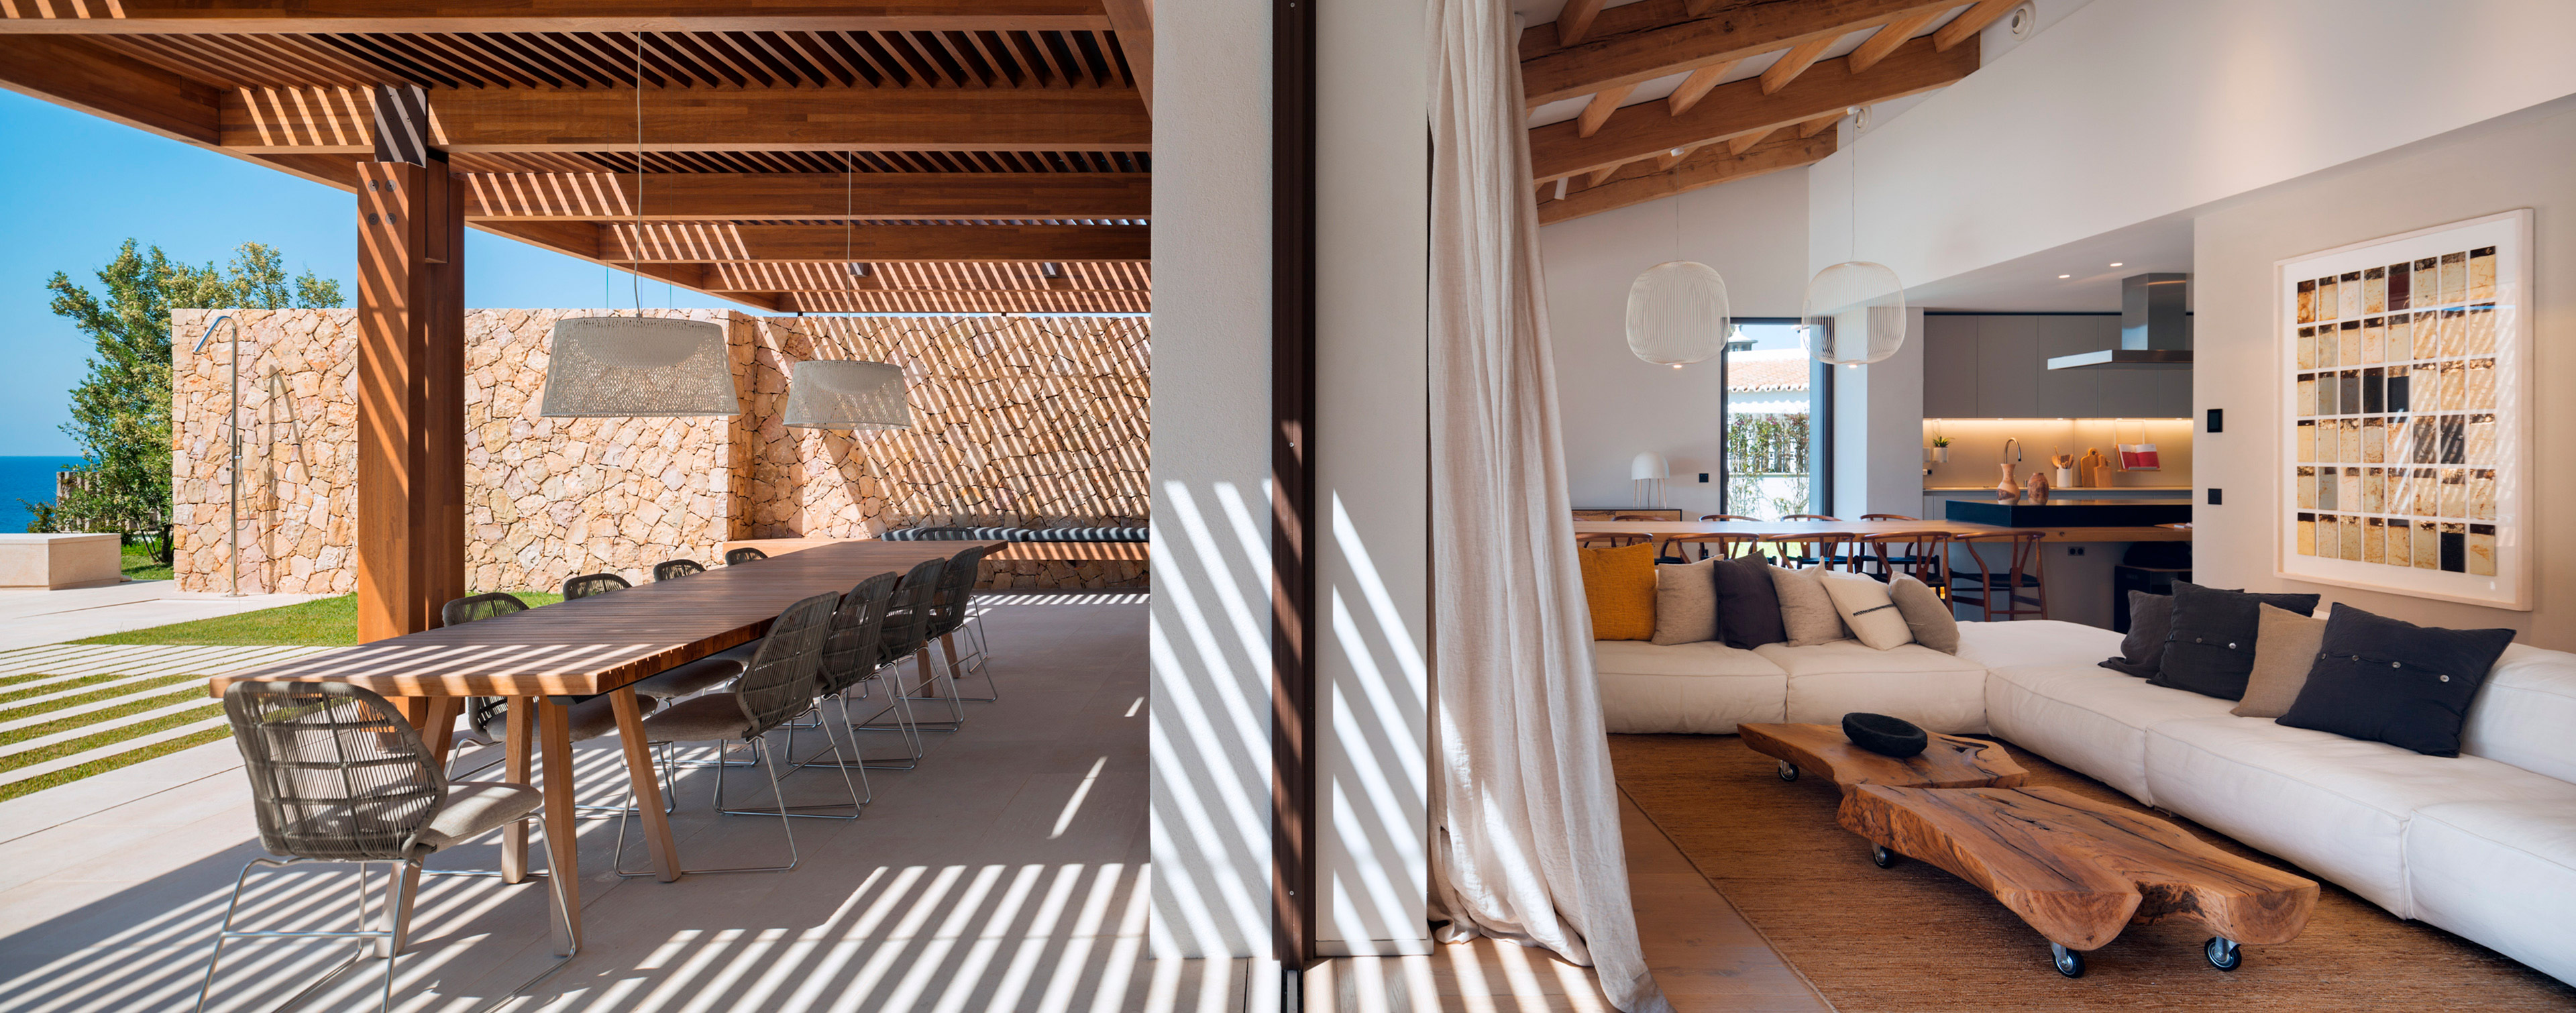 luv studio luxury architects algarve da rocha house IMG 03 - LUV Studio - Architecture & Design - Barcelona